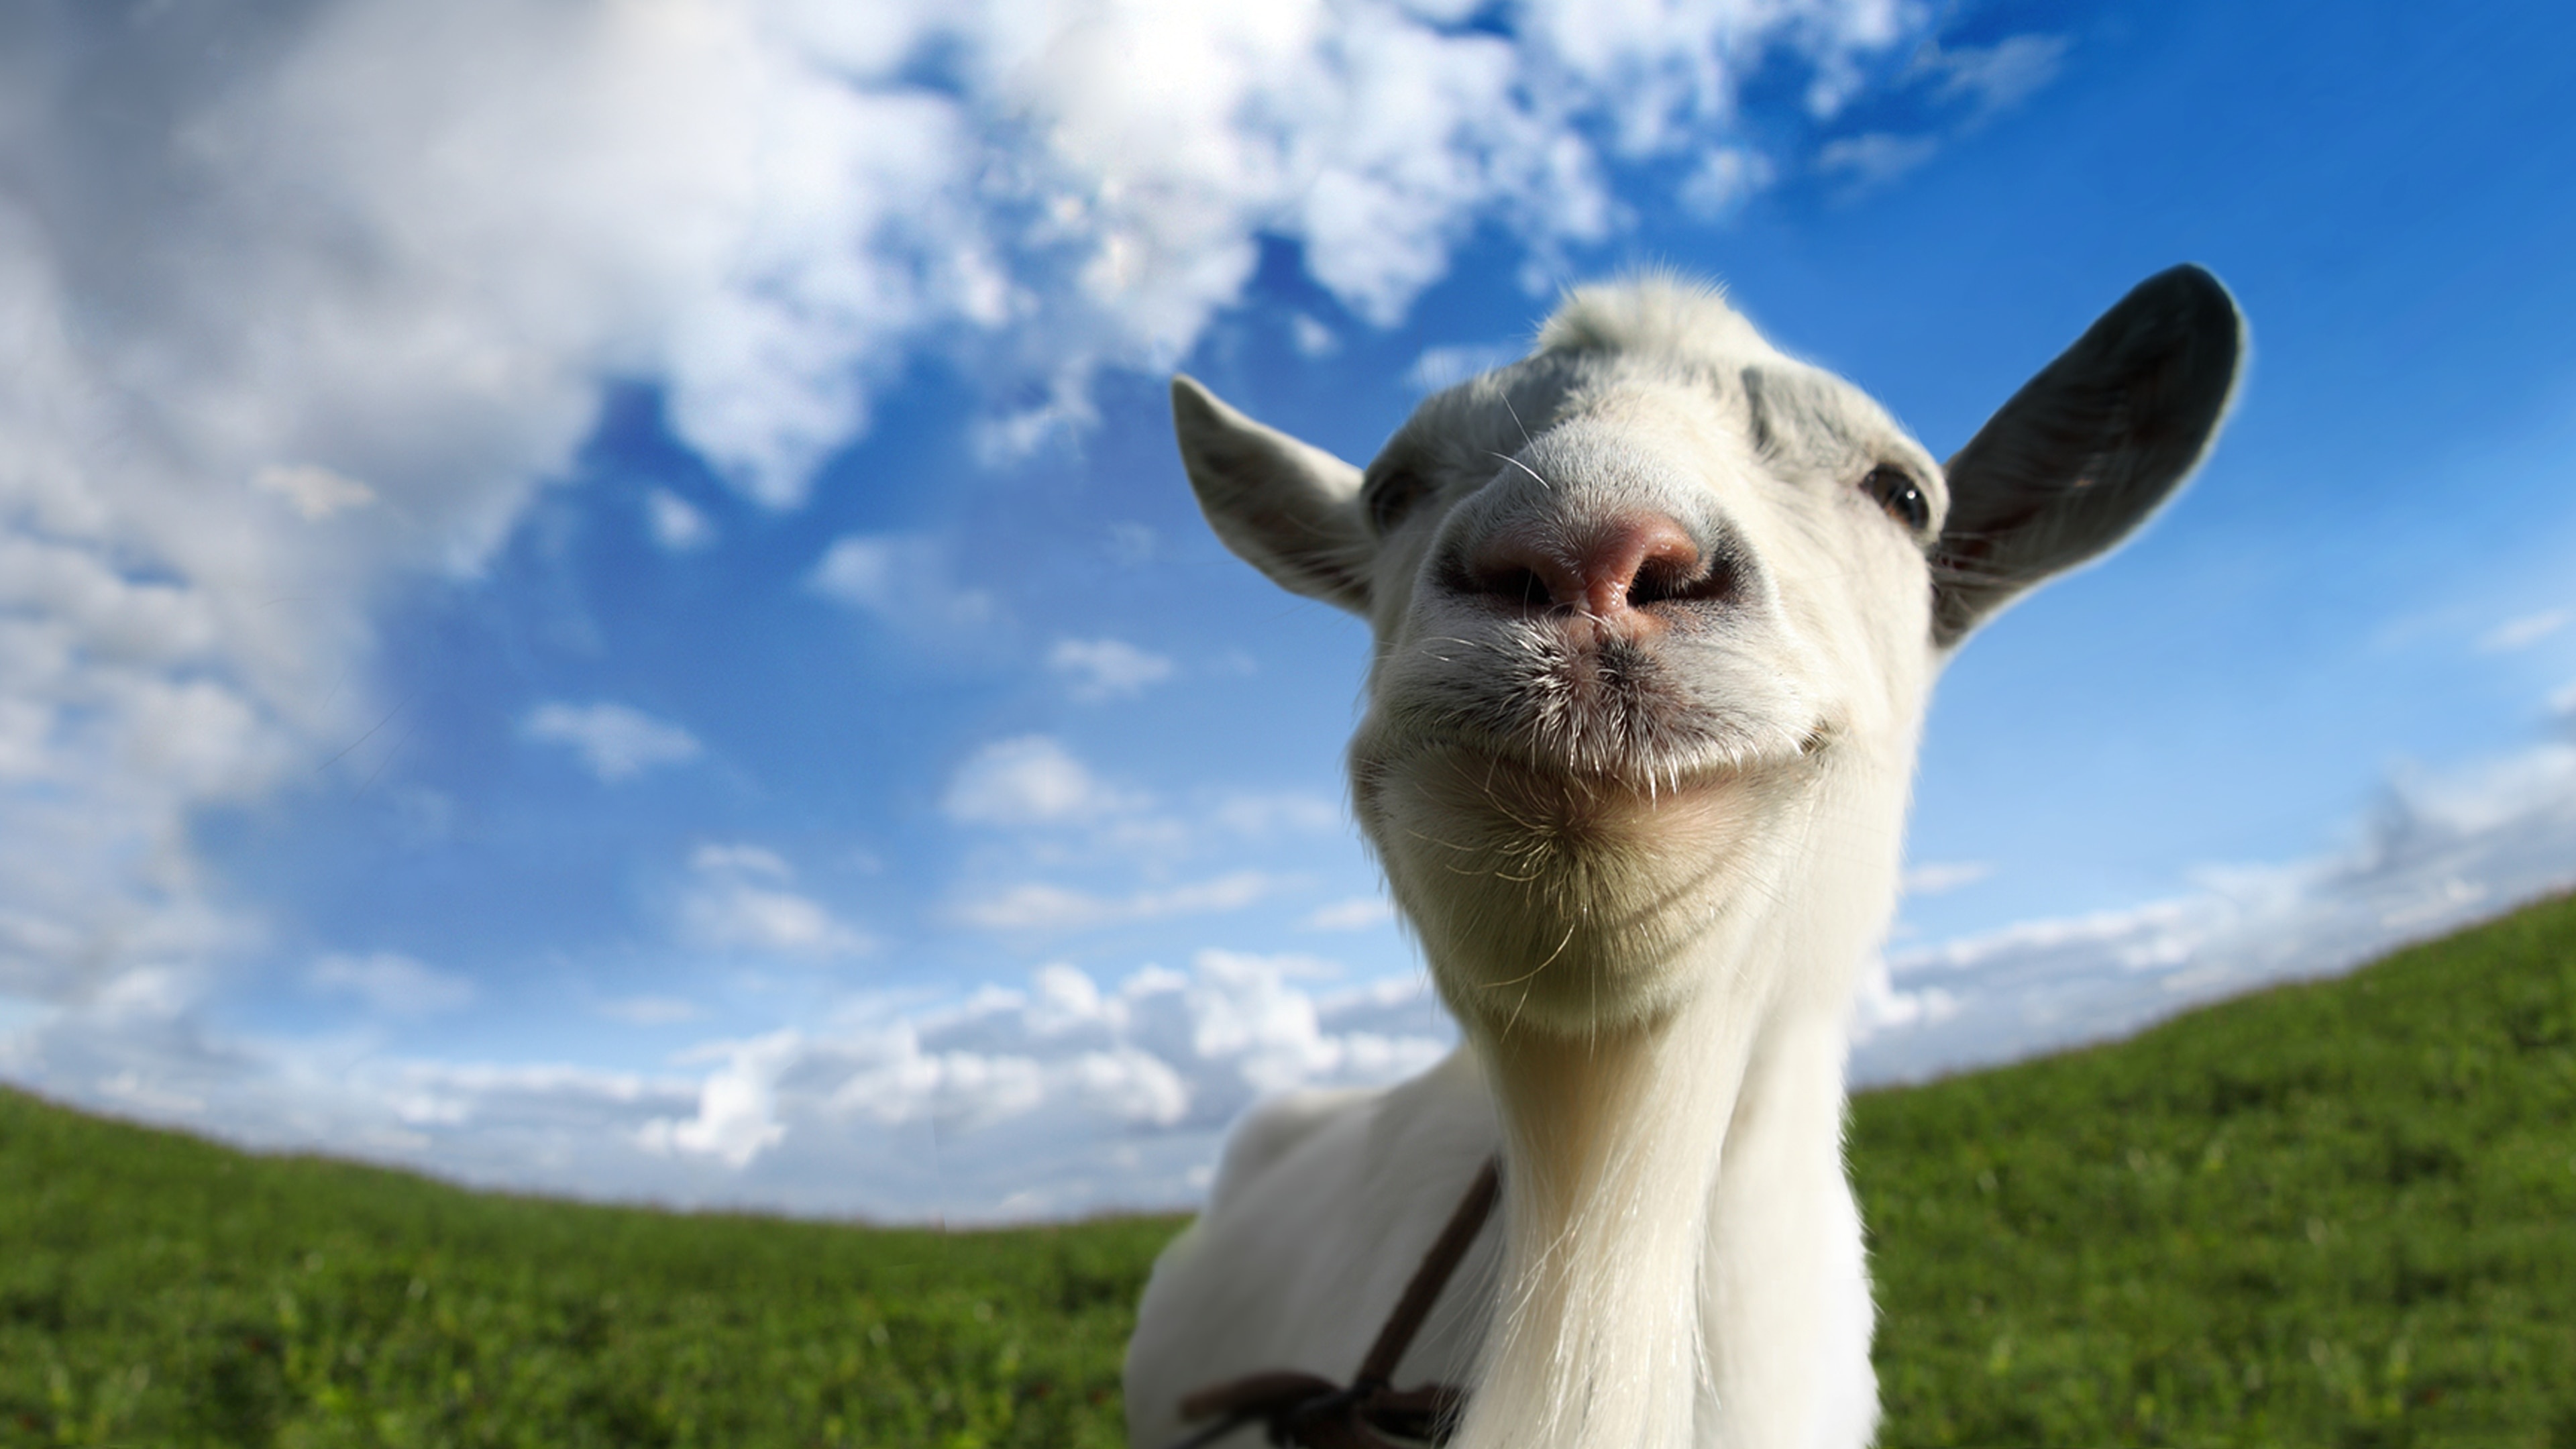 Goat simulator game, Virtual goat experience, Fictitious goat world, Goat-themed gaming, 3840x2160 4K Desktop